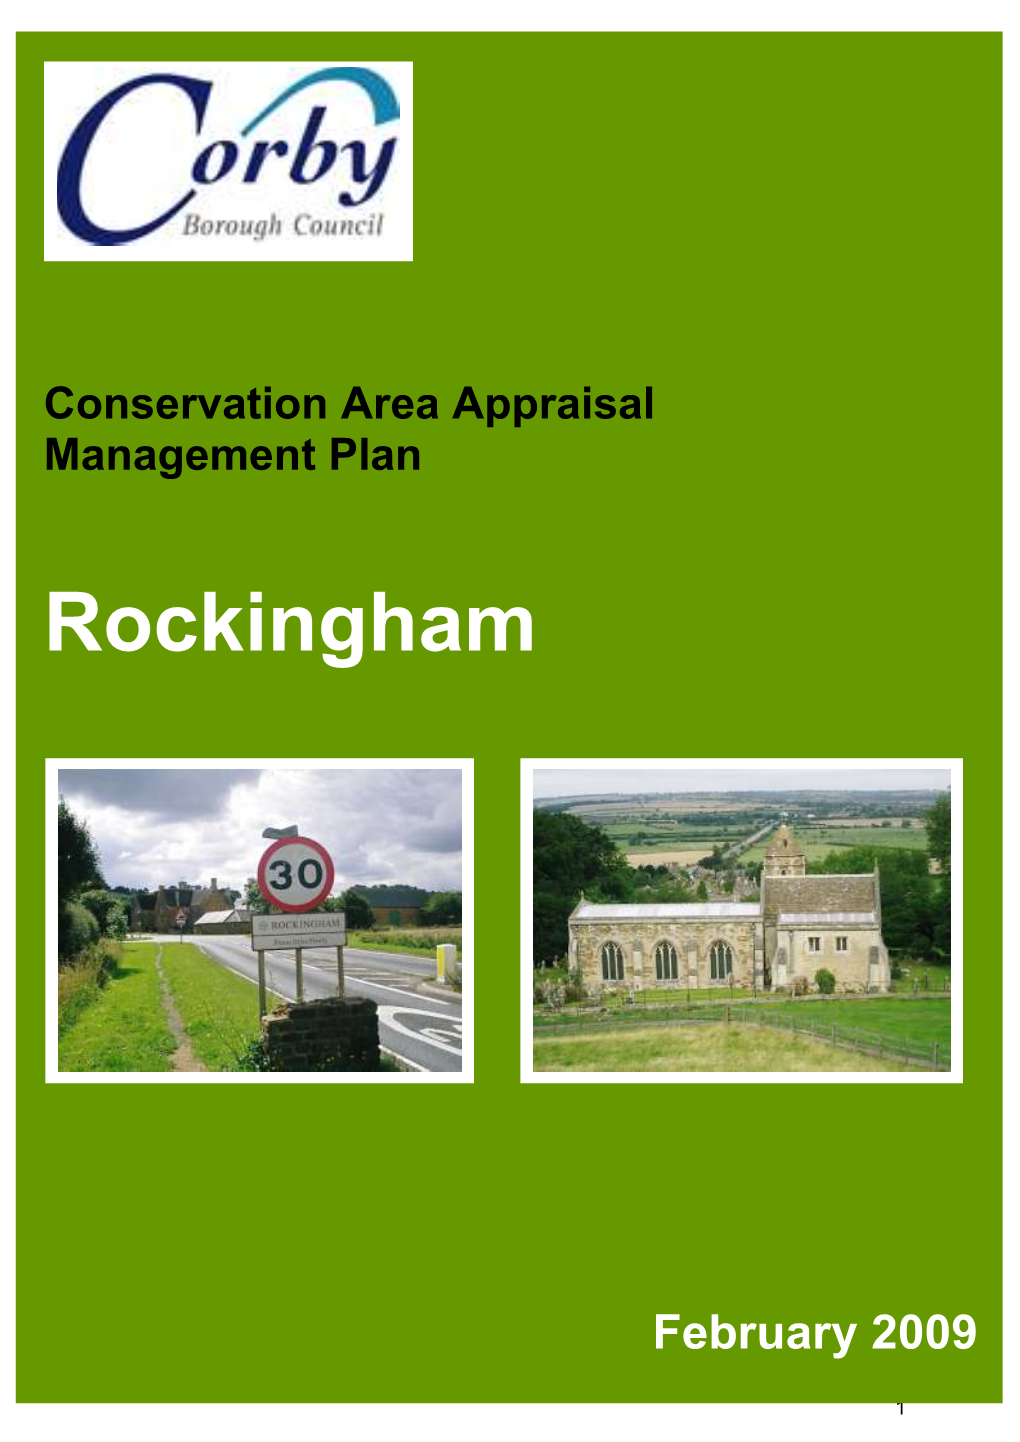 Rockingham Conservation Area Management Plan